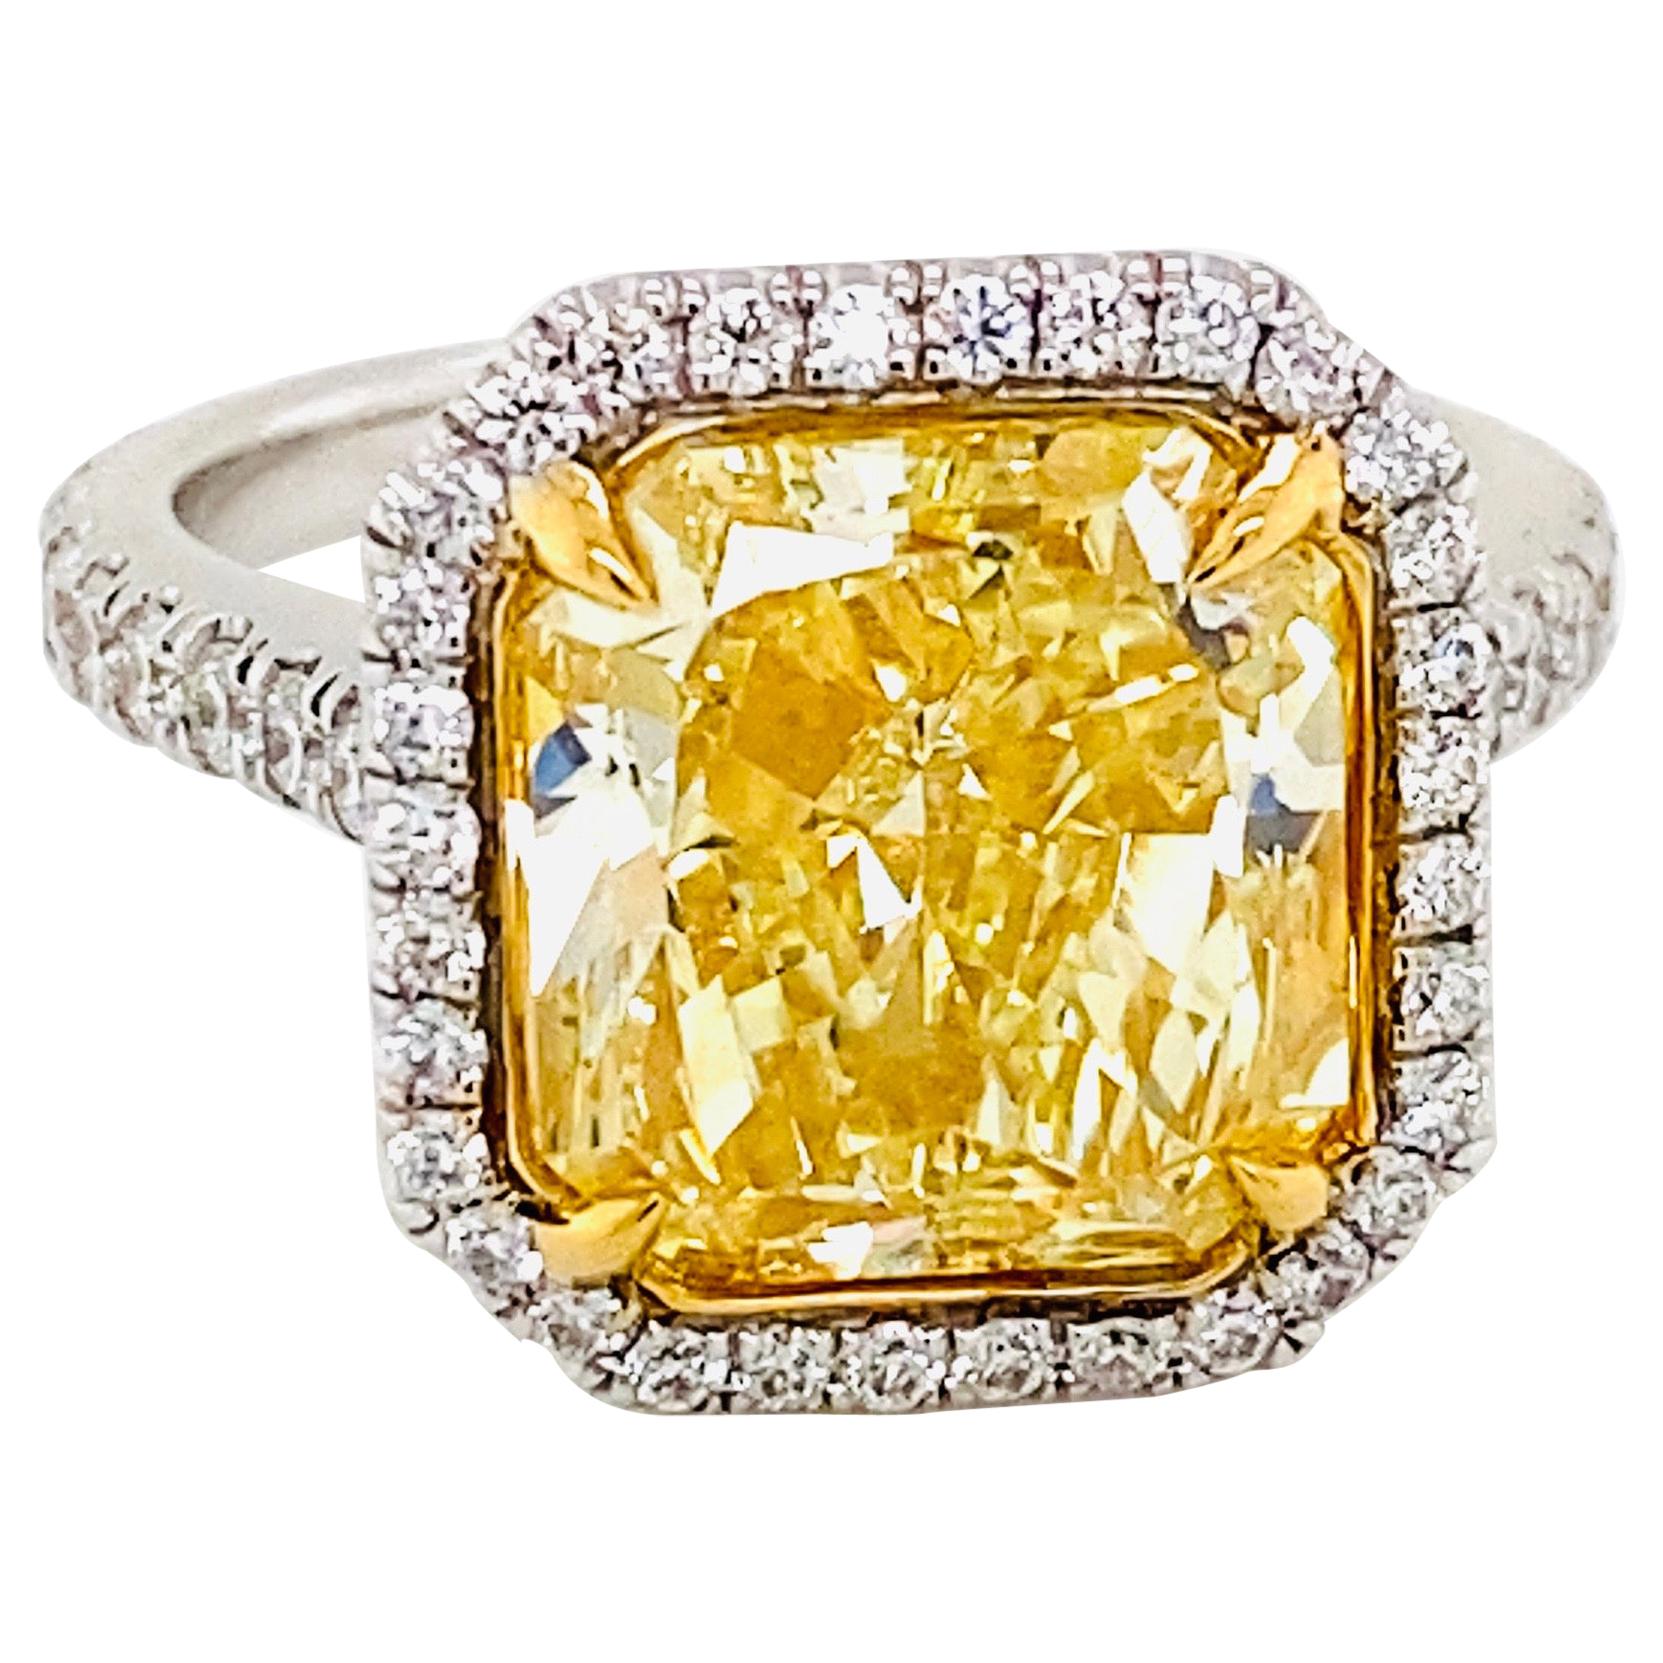 Emilio Jewelry 6.50 Carat GIA Certified Fancy Yellow Diamond Ring